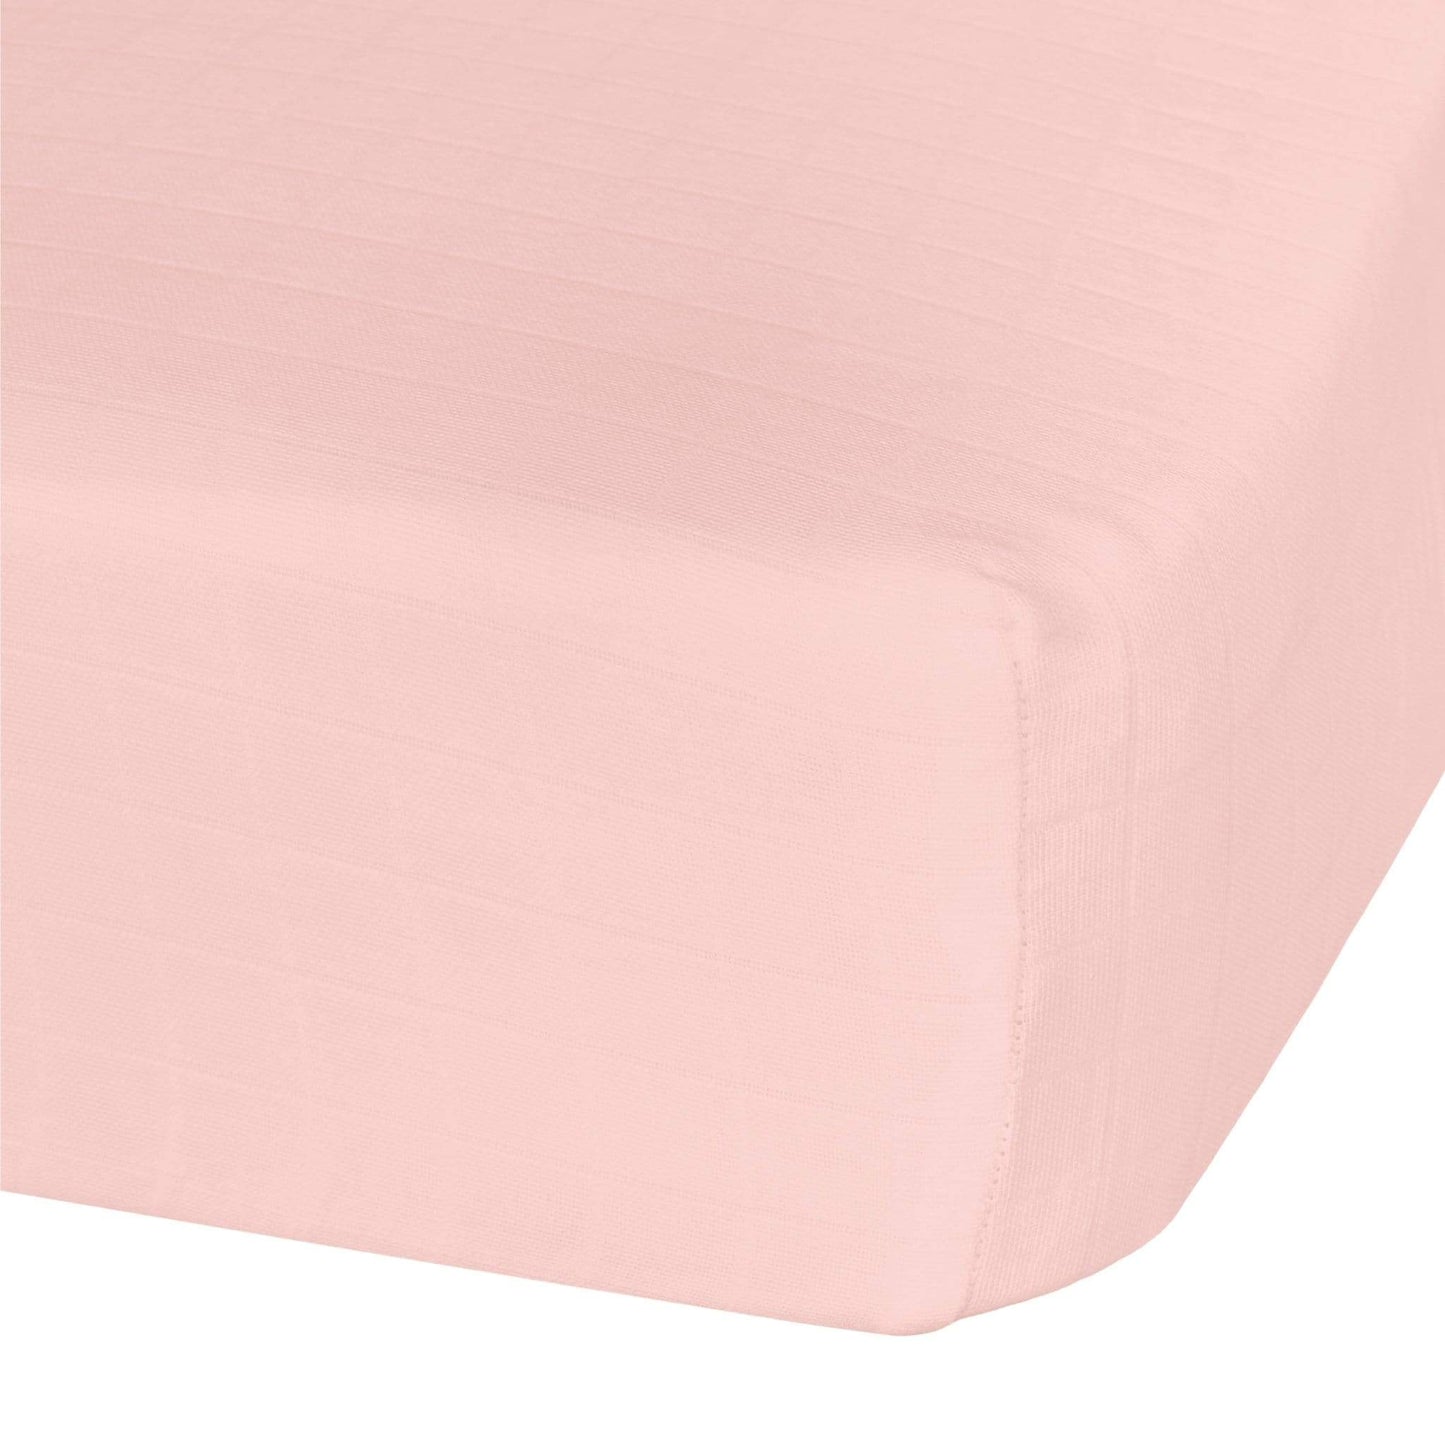 Cotton muslin fitted sheet - Pink